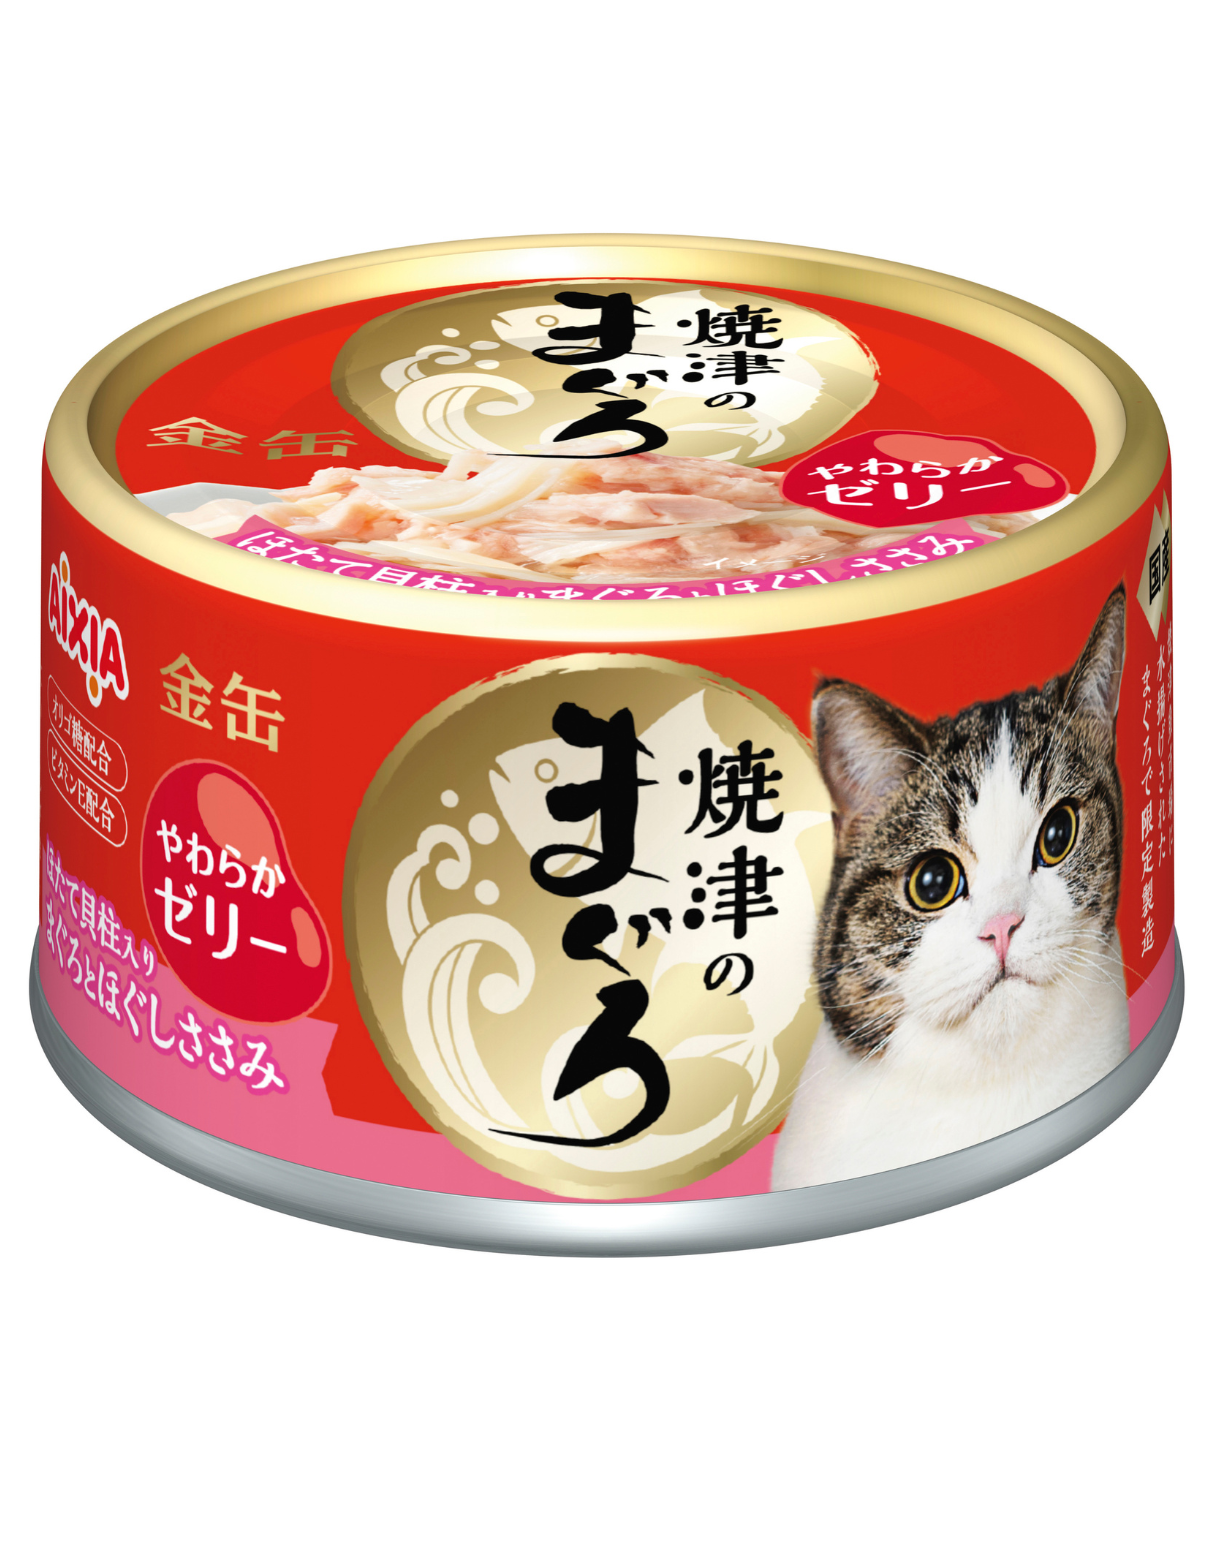 yz4) Aixia Yaizu-no-maguro Tuna & Chicken W/ Scallop Cat Wet Food